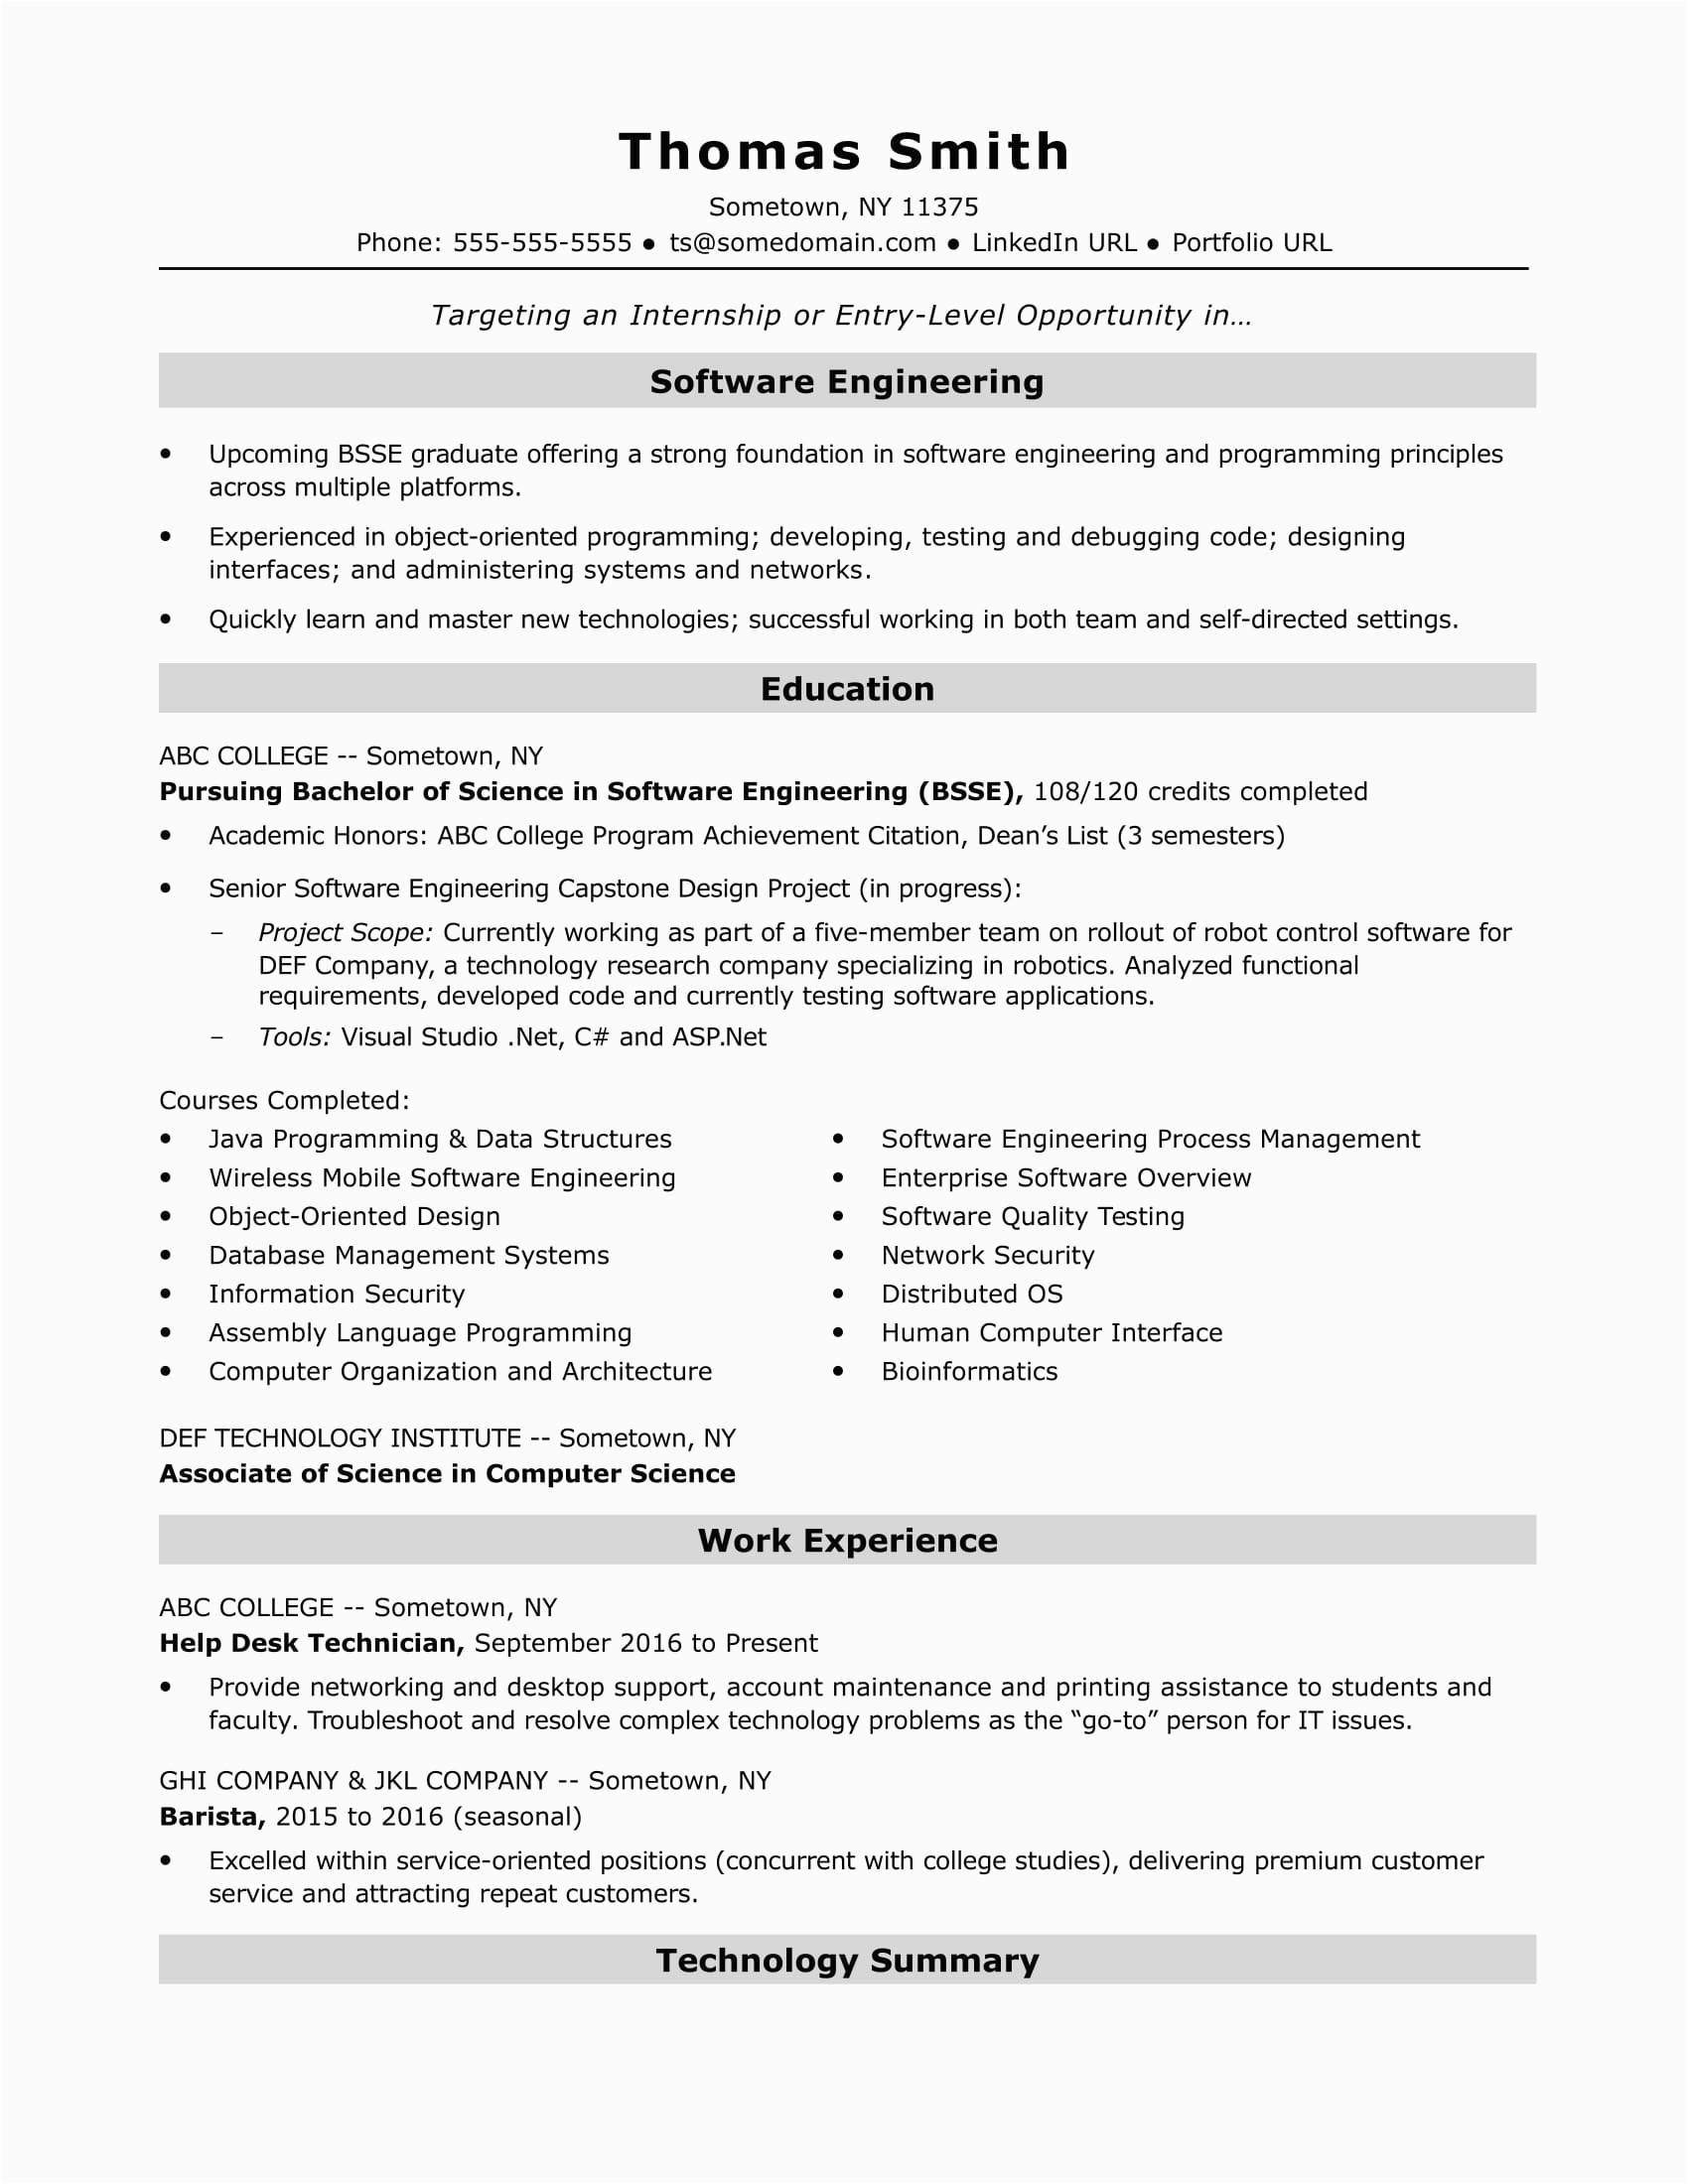 Sample Resume for Entry Level software Developer Entry Level software Engineer Resume Sample